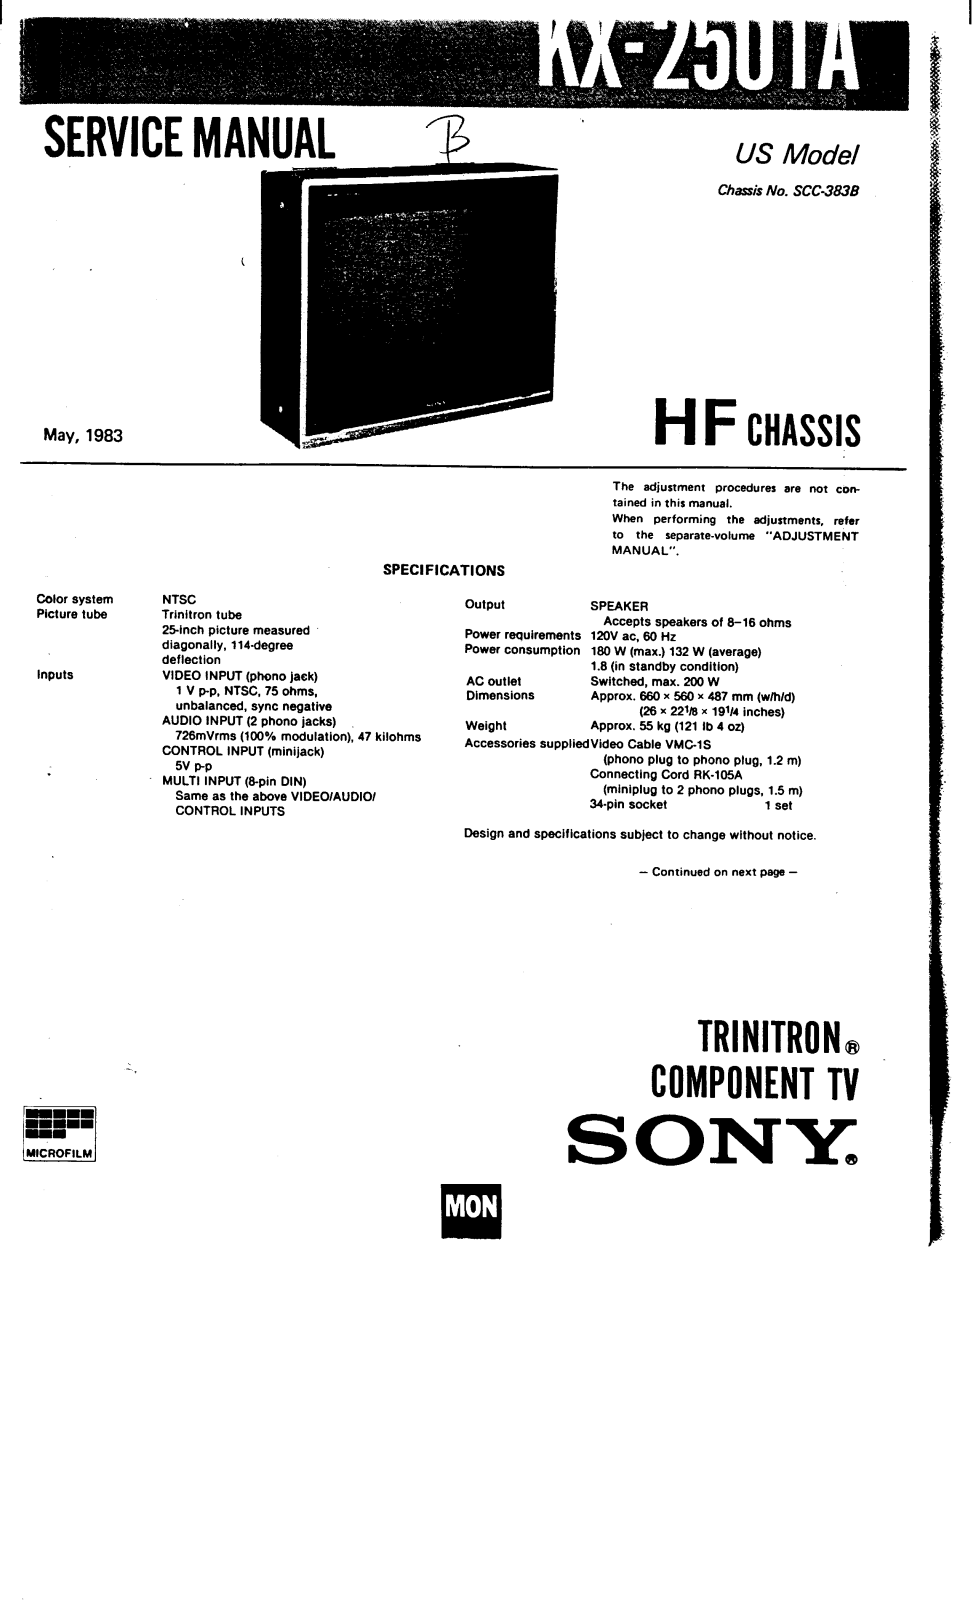 Sony KX2501A Service manual